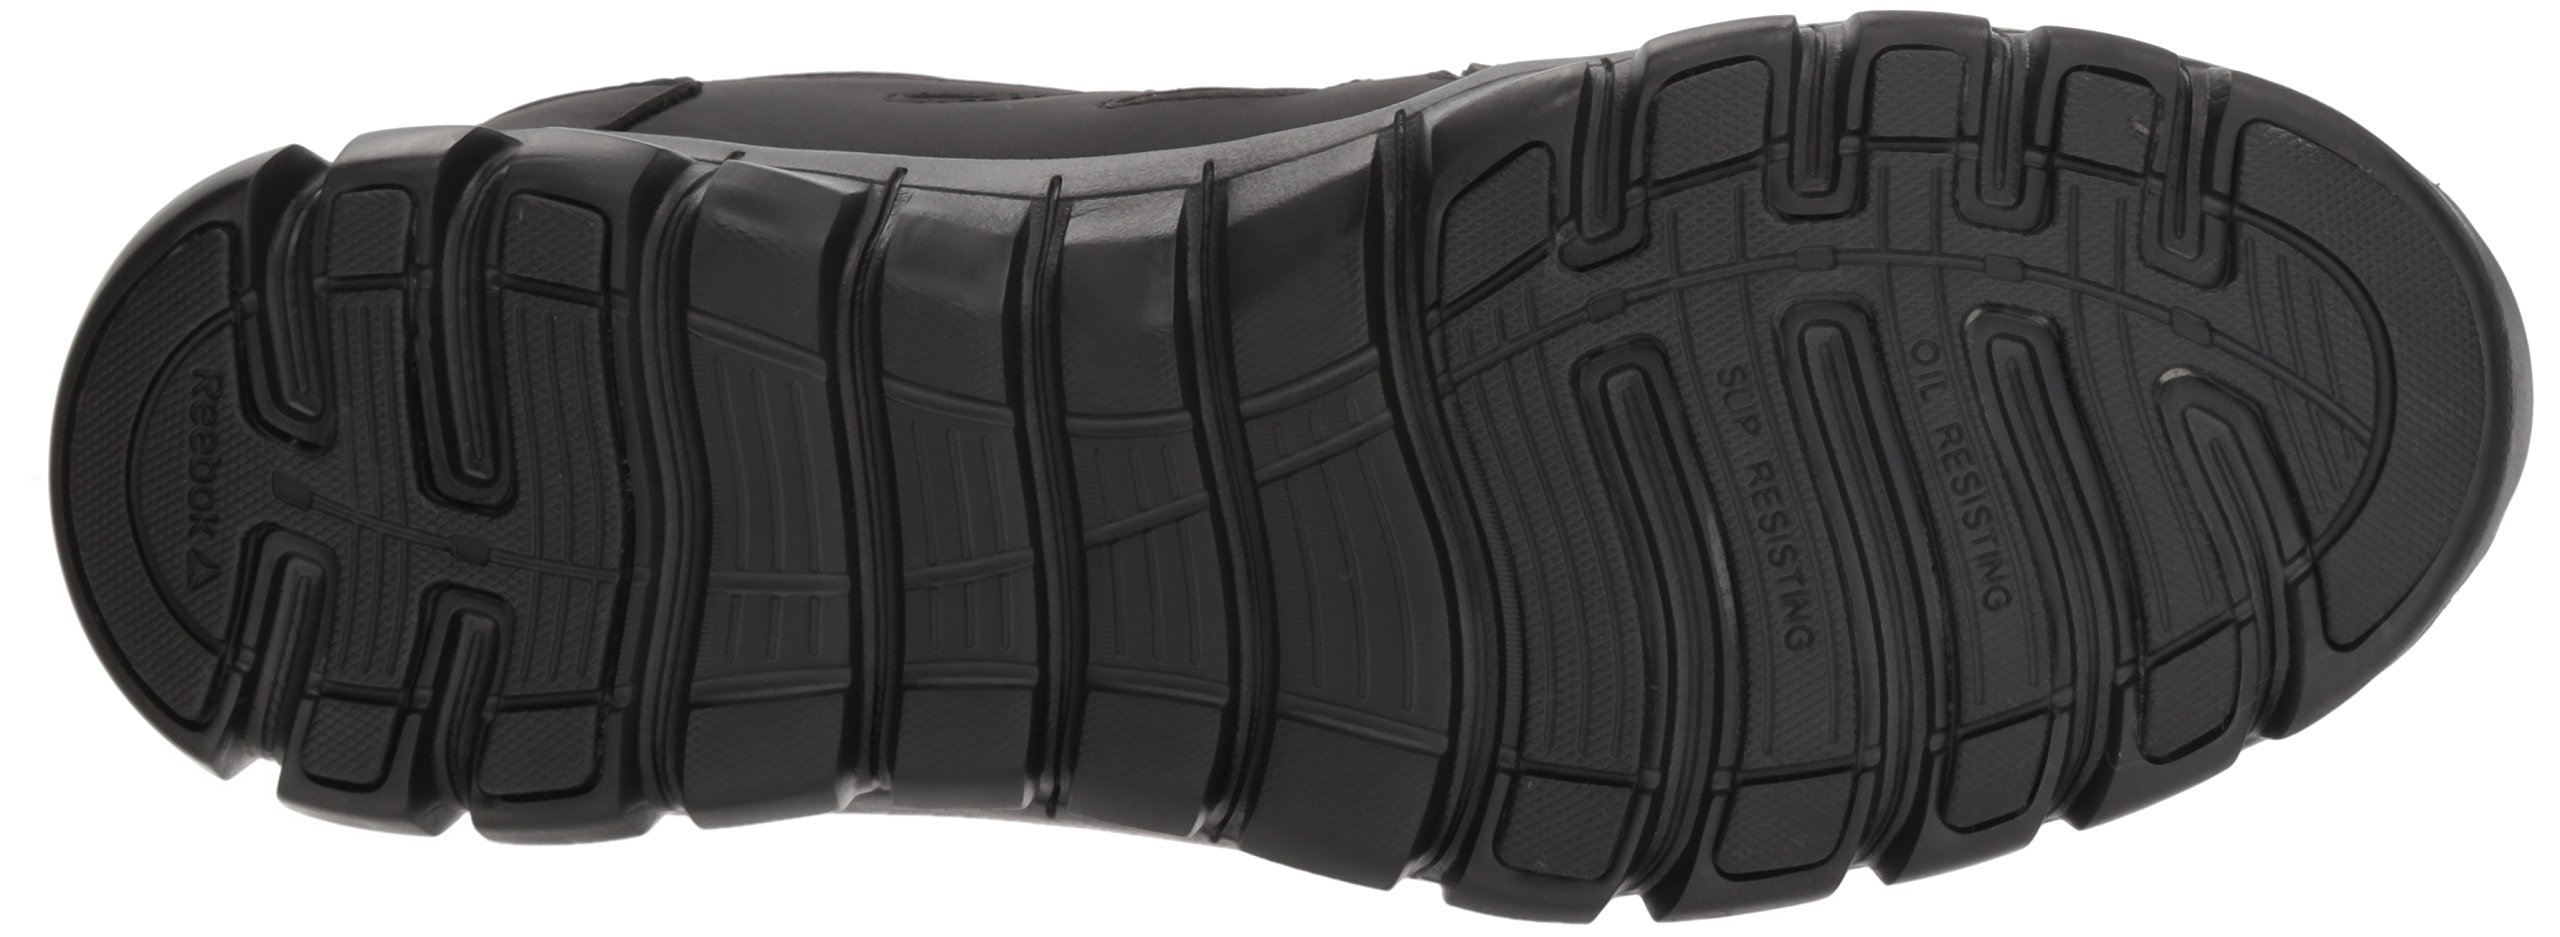 Reebok mens Sublite Cushion Mid Military Tactical Boot, Black, 11 US